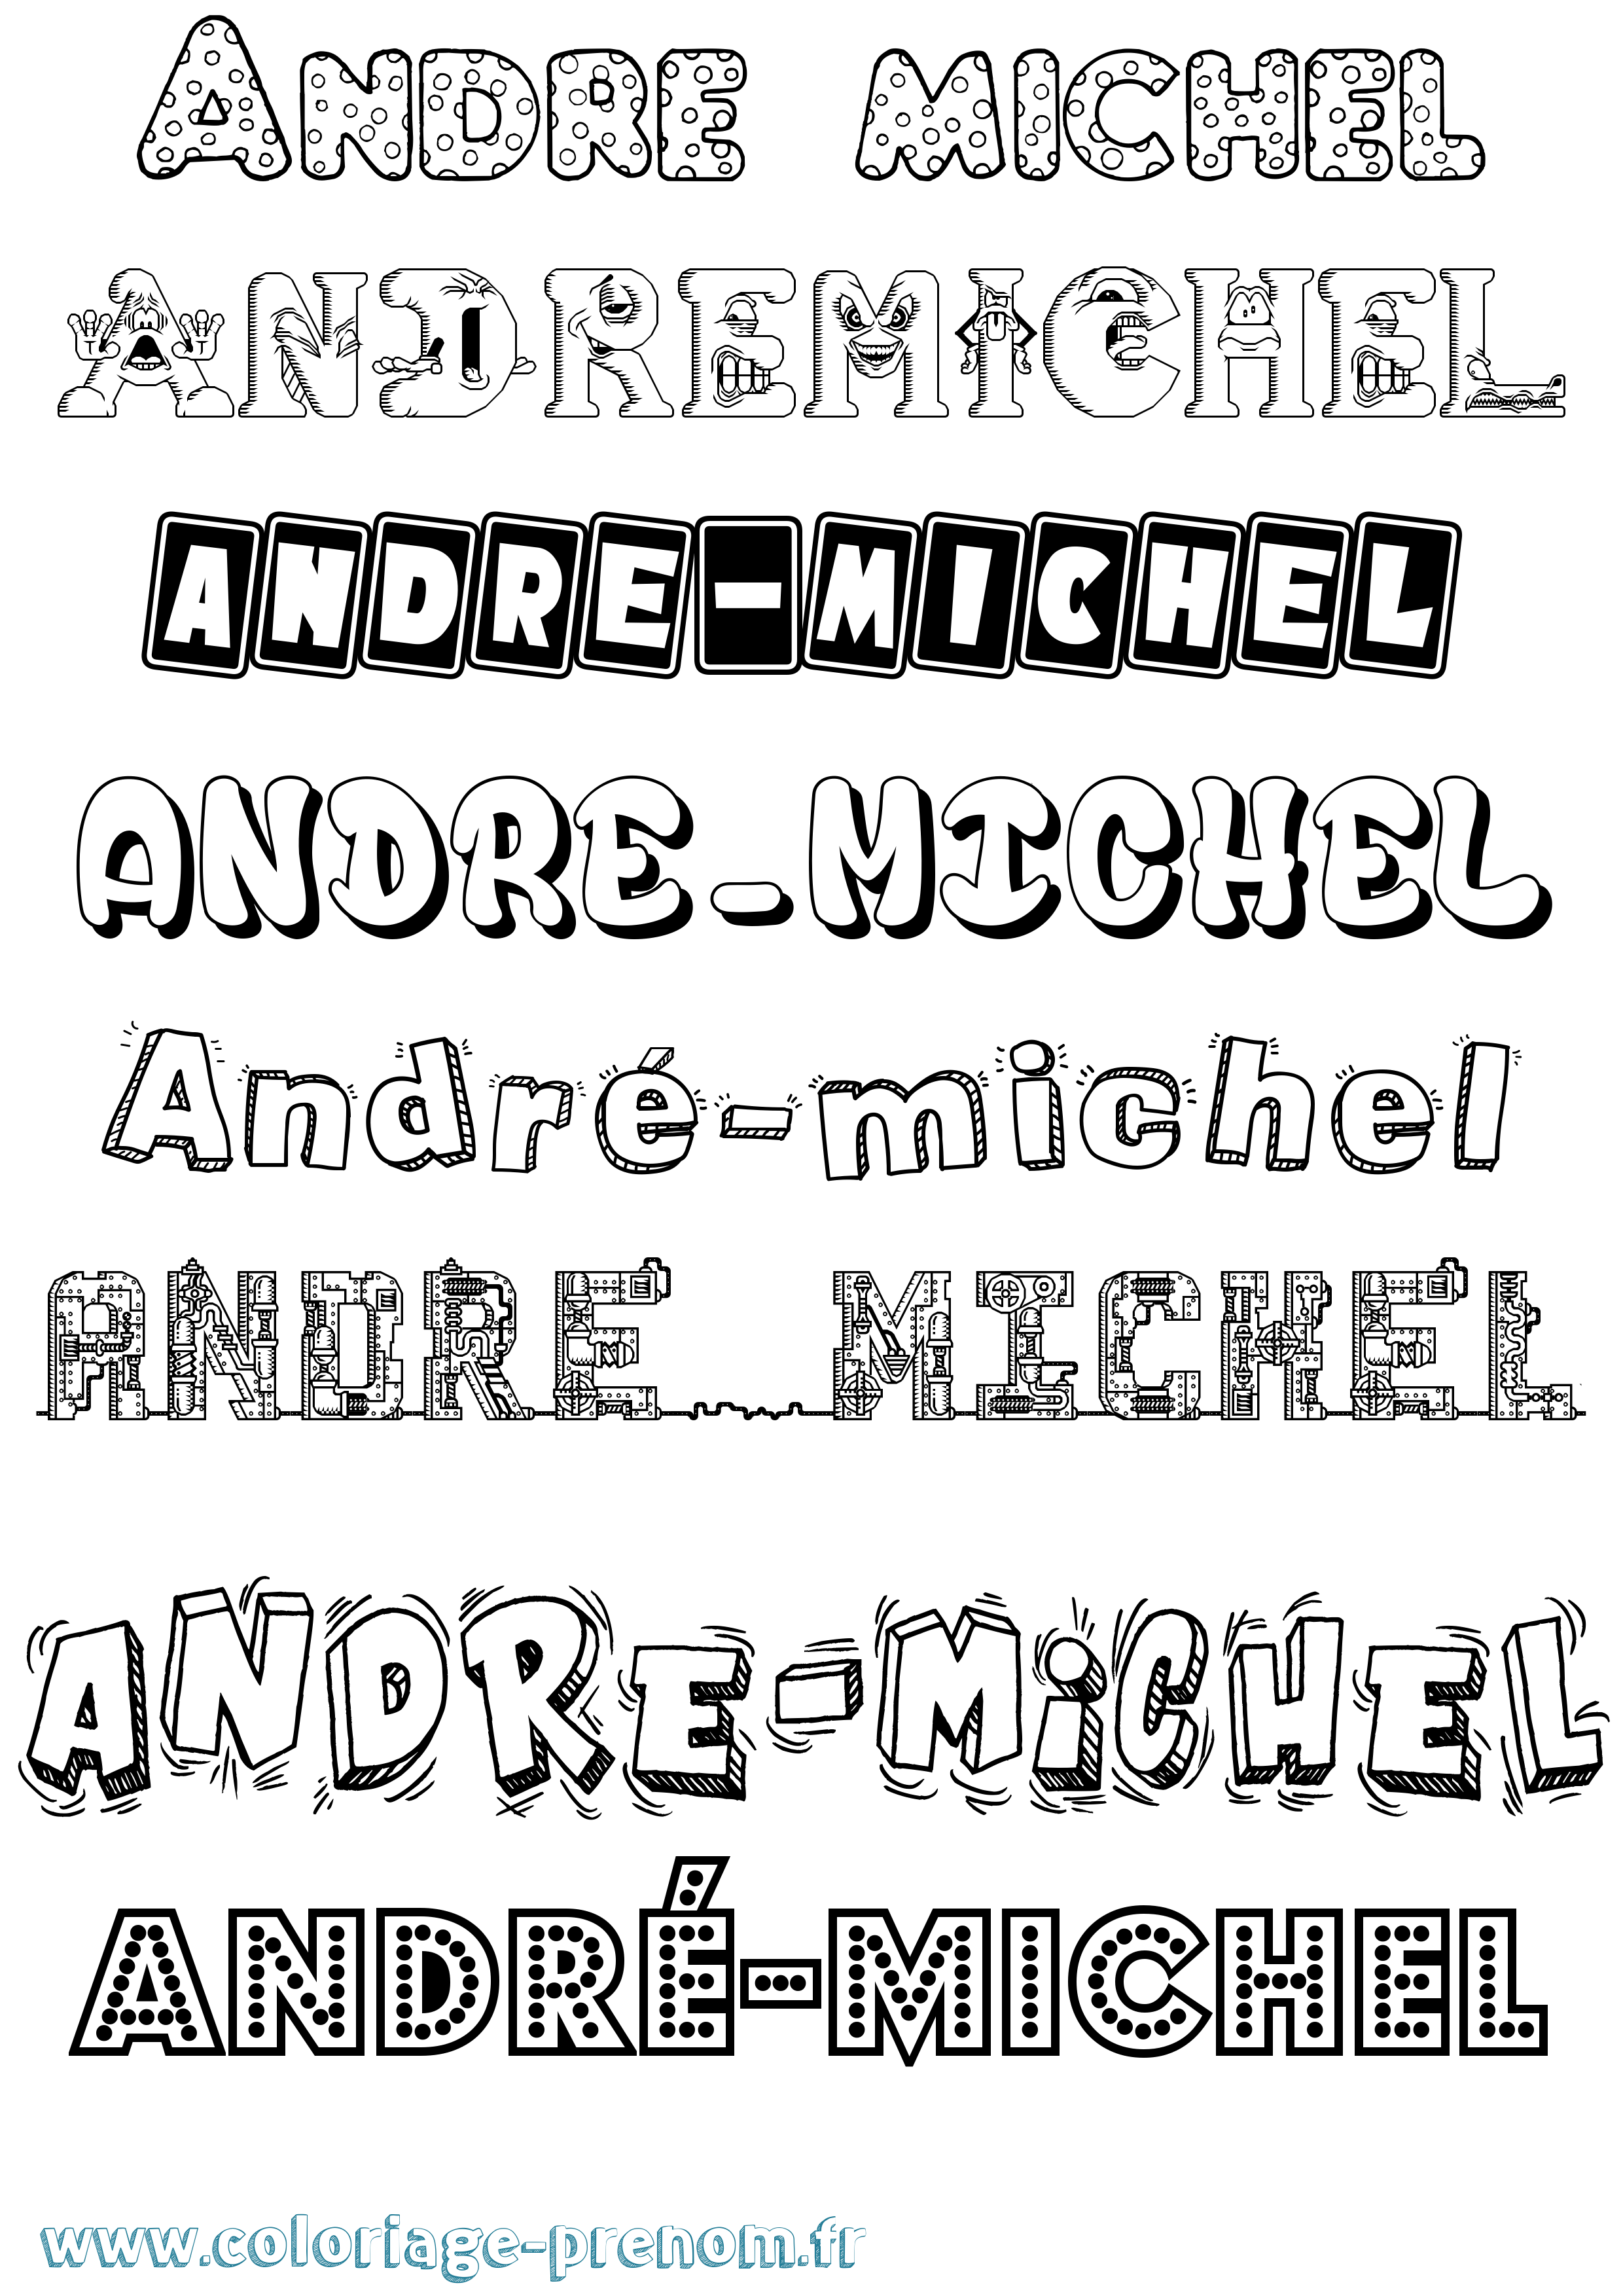 Coloriage prénom André-Michel Fun